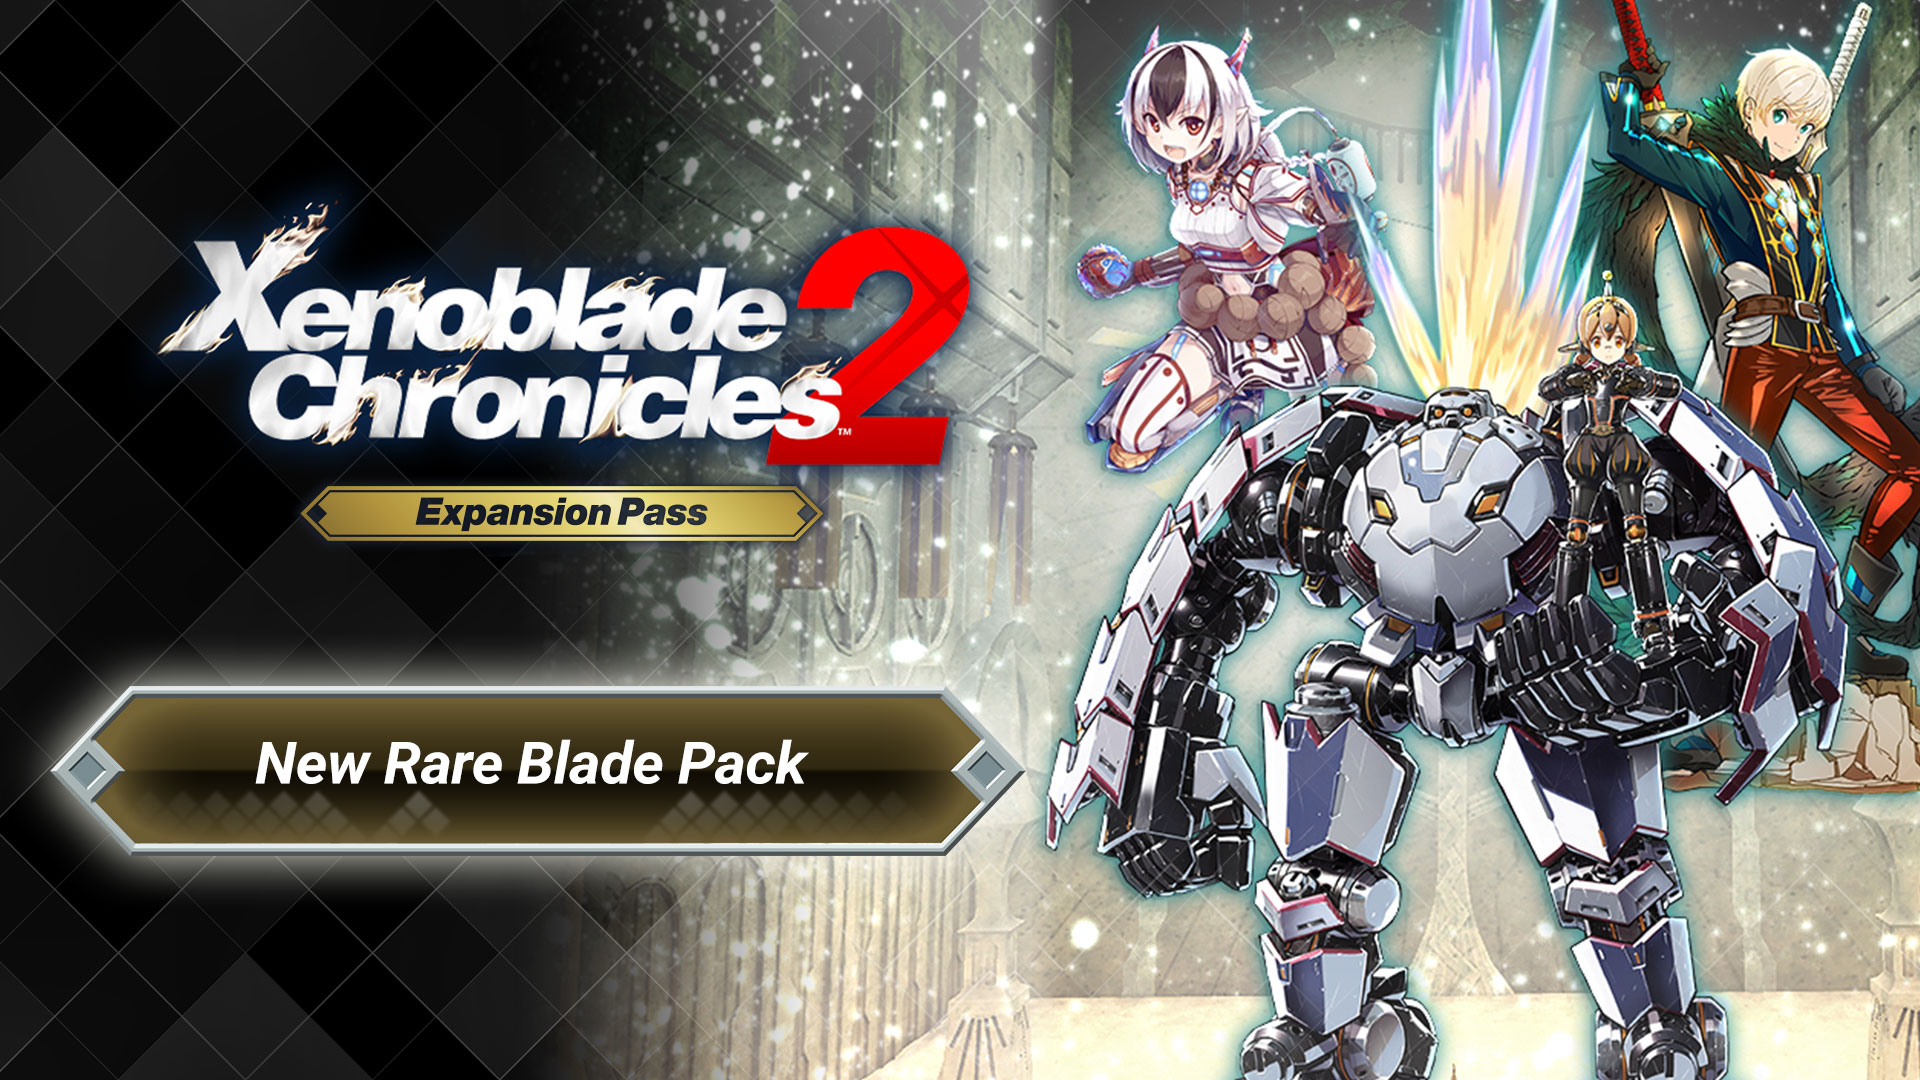 New Rare Blade Pack